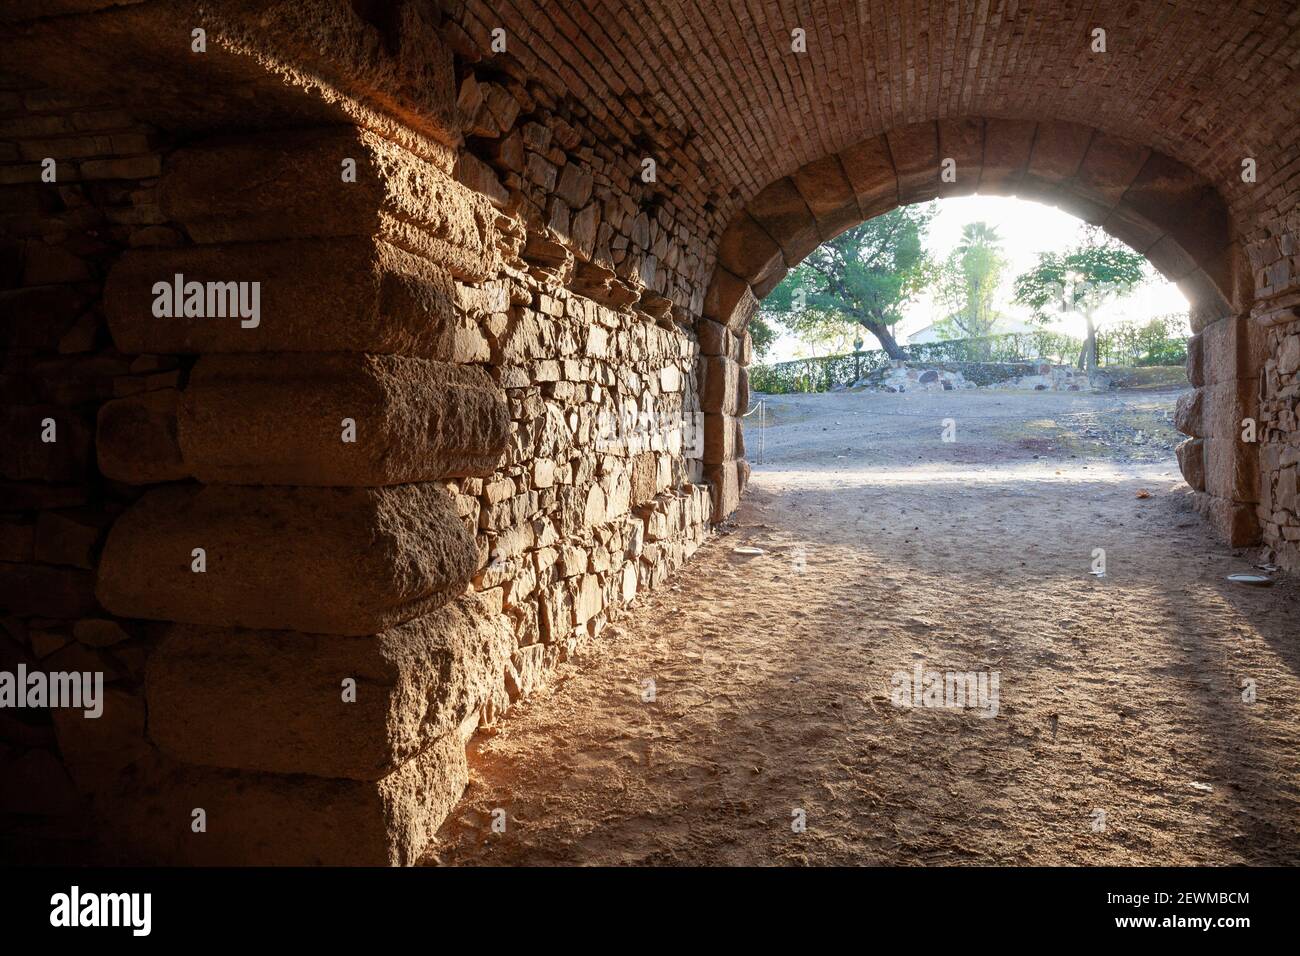 Europe, Spain, Badajoz, Merida, Amphitheatre of Merida (Ancient Roman Ruins), Tunnel into Main Arena. Stock Photo